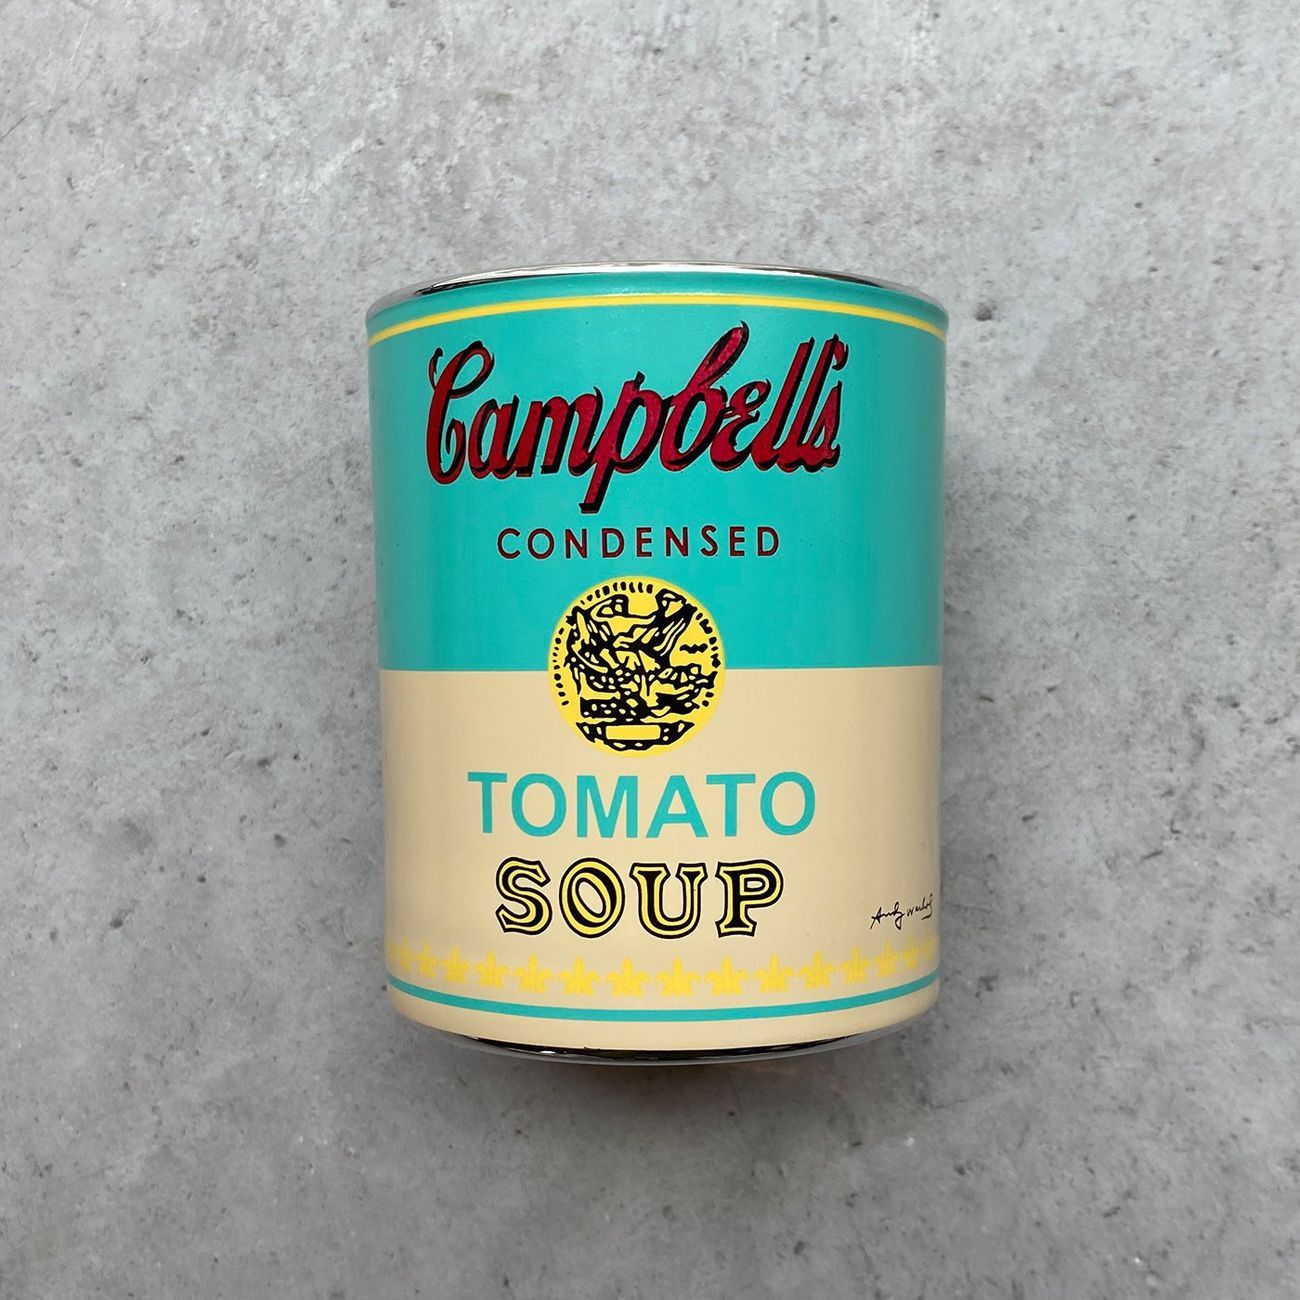 La candela Campbell ispirata a Andy Warhol